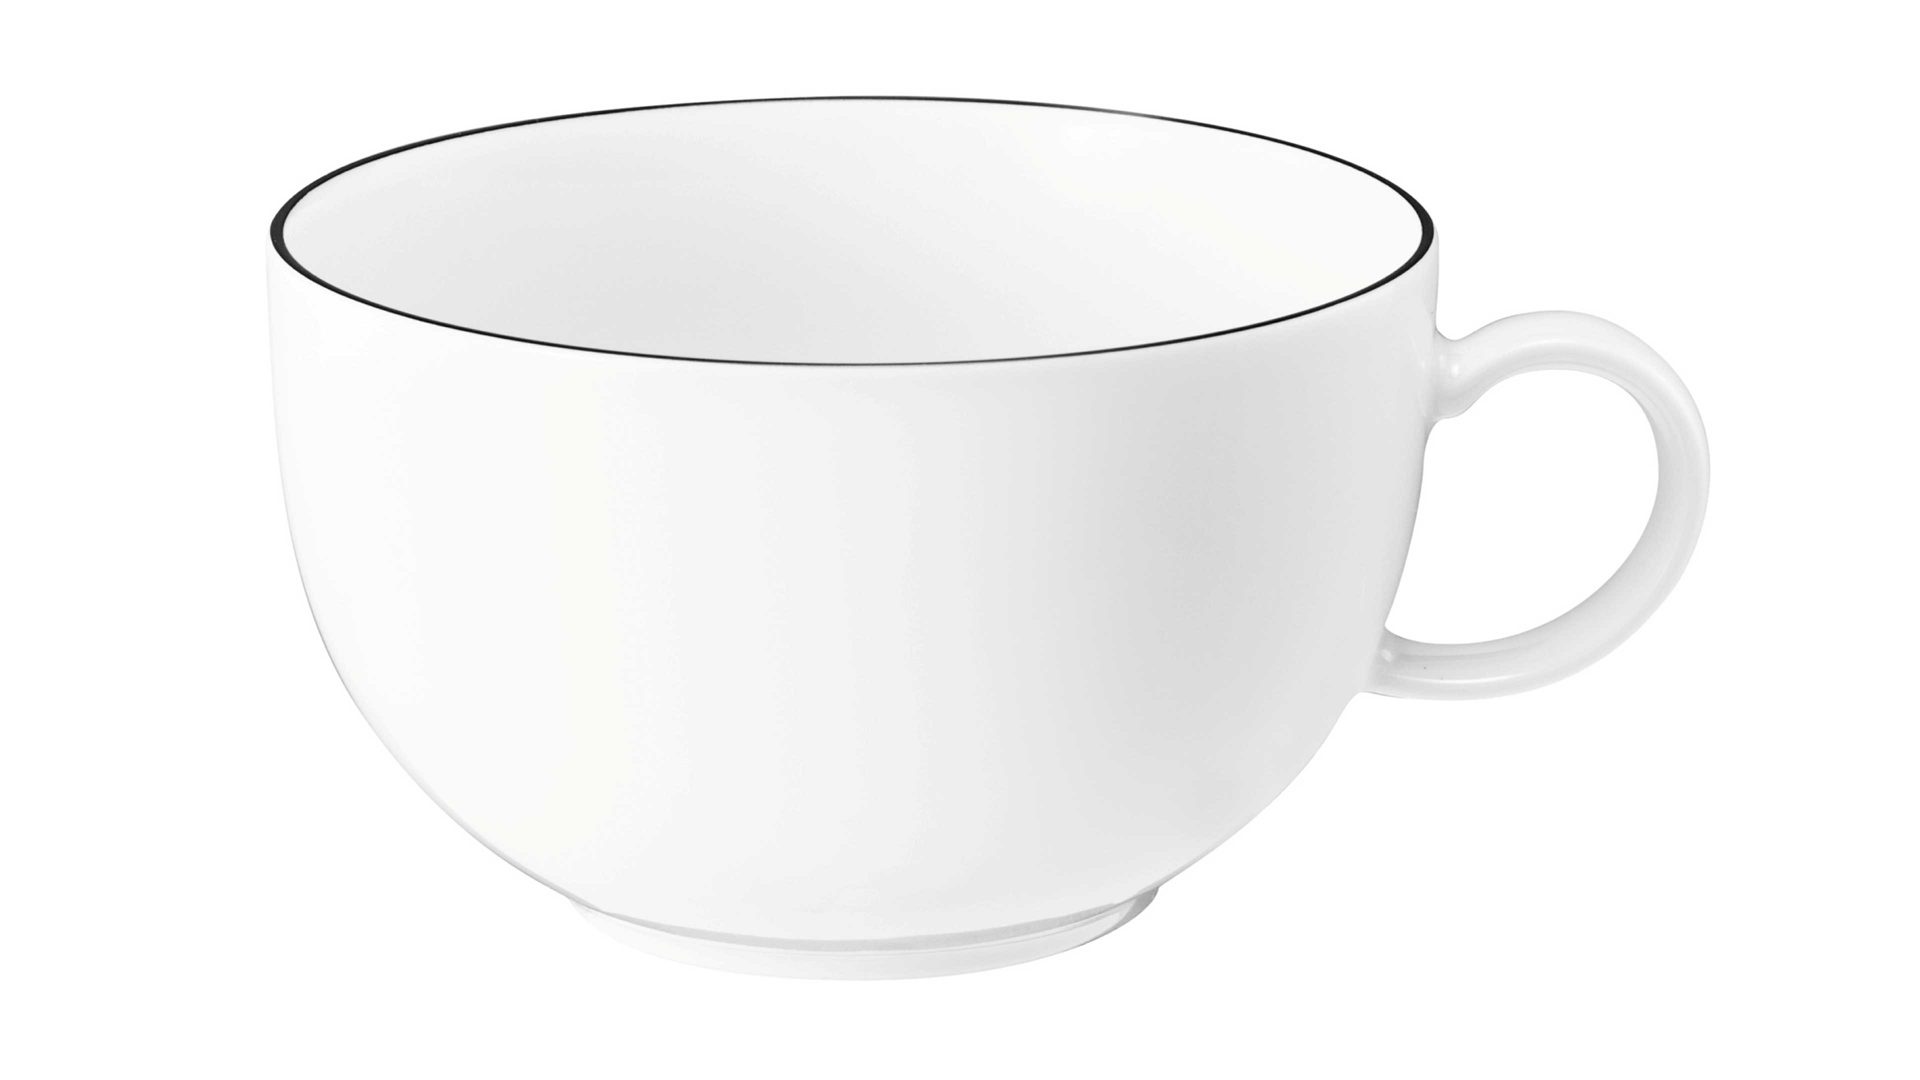 Kaffeetasse Seltmann aus Porzellan in Weiß Seltmann Lido – Milchkaffeetasse weißes Porzellan – ca. 350 ml